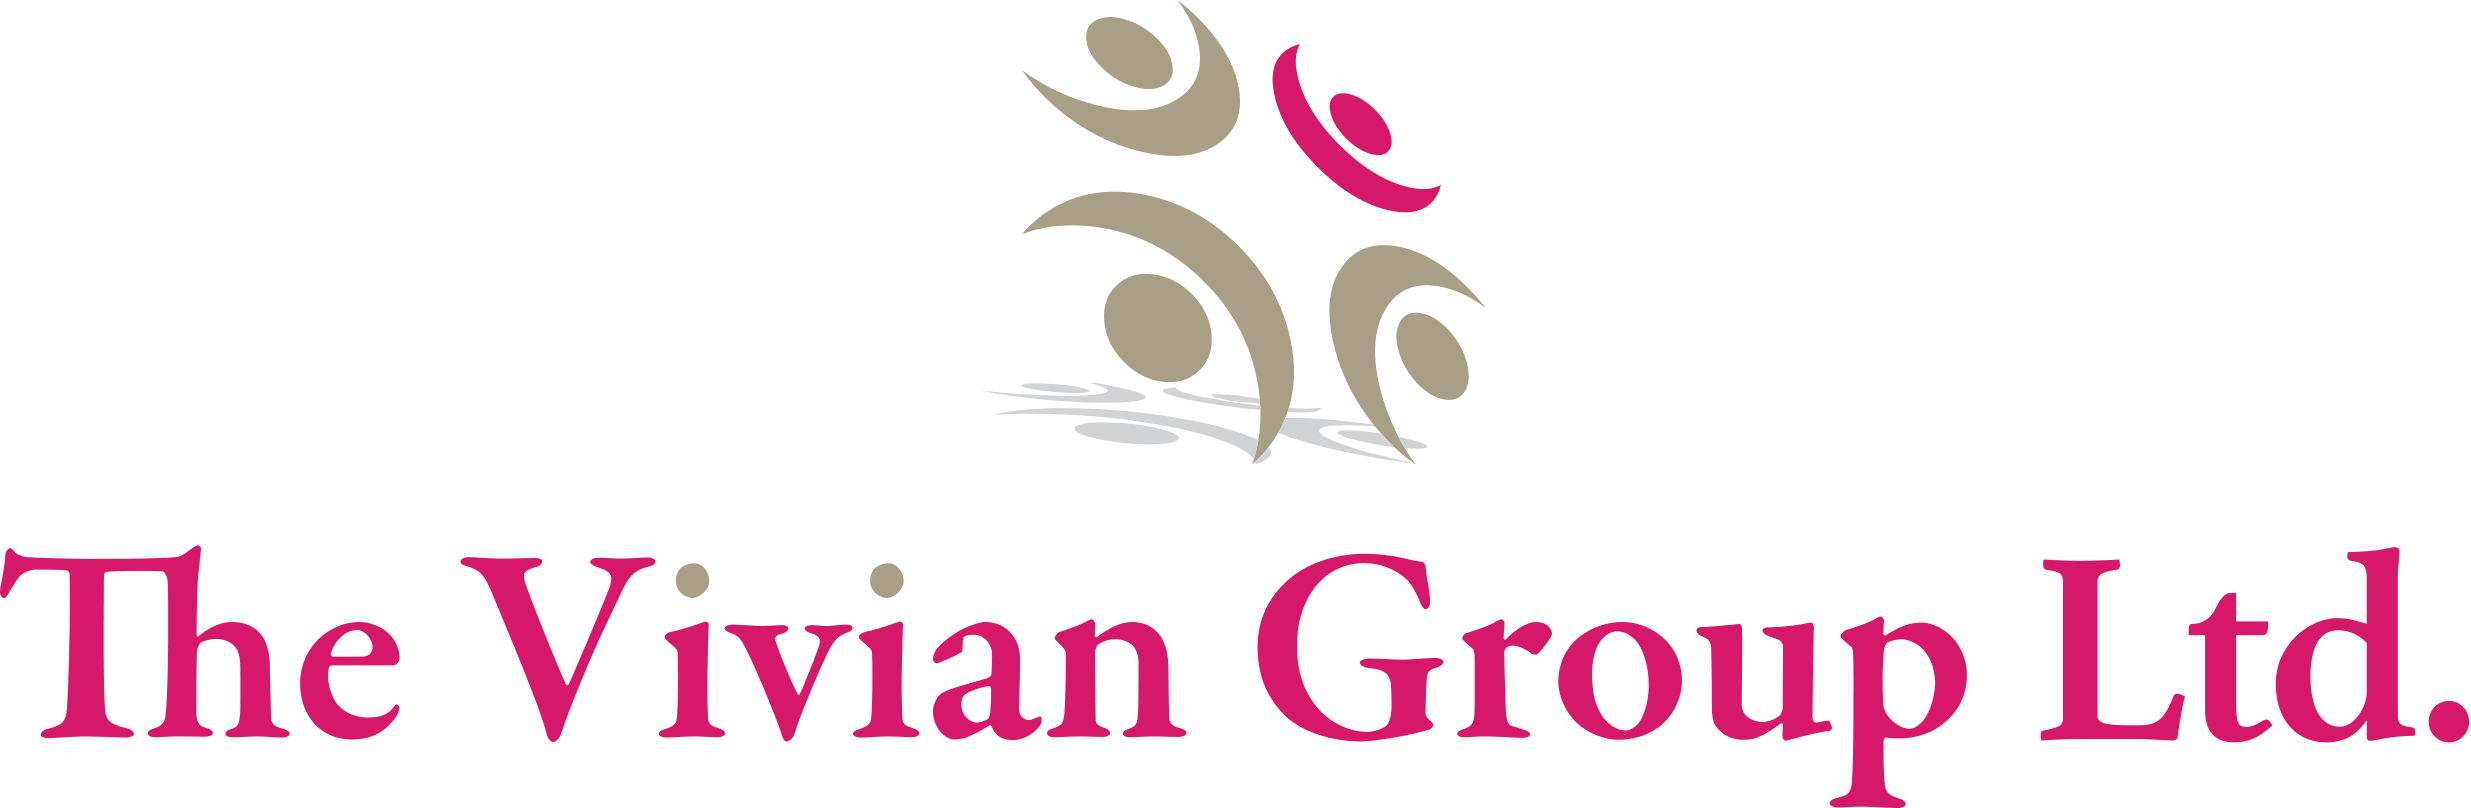 The Vivian Group Ltd.  